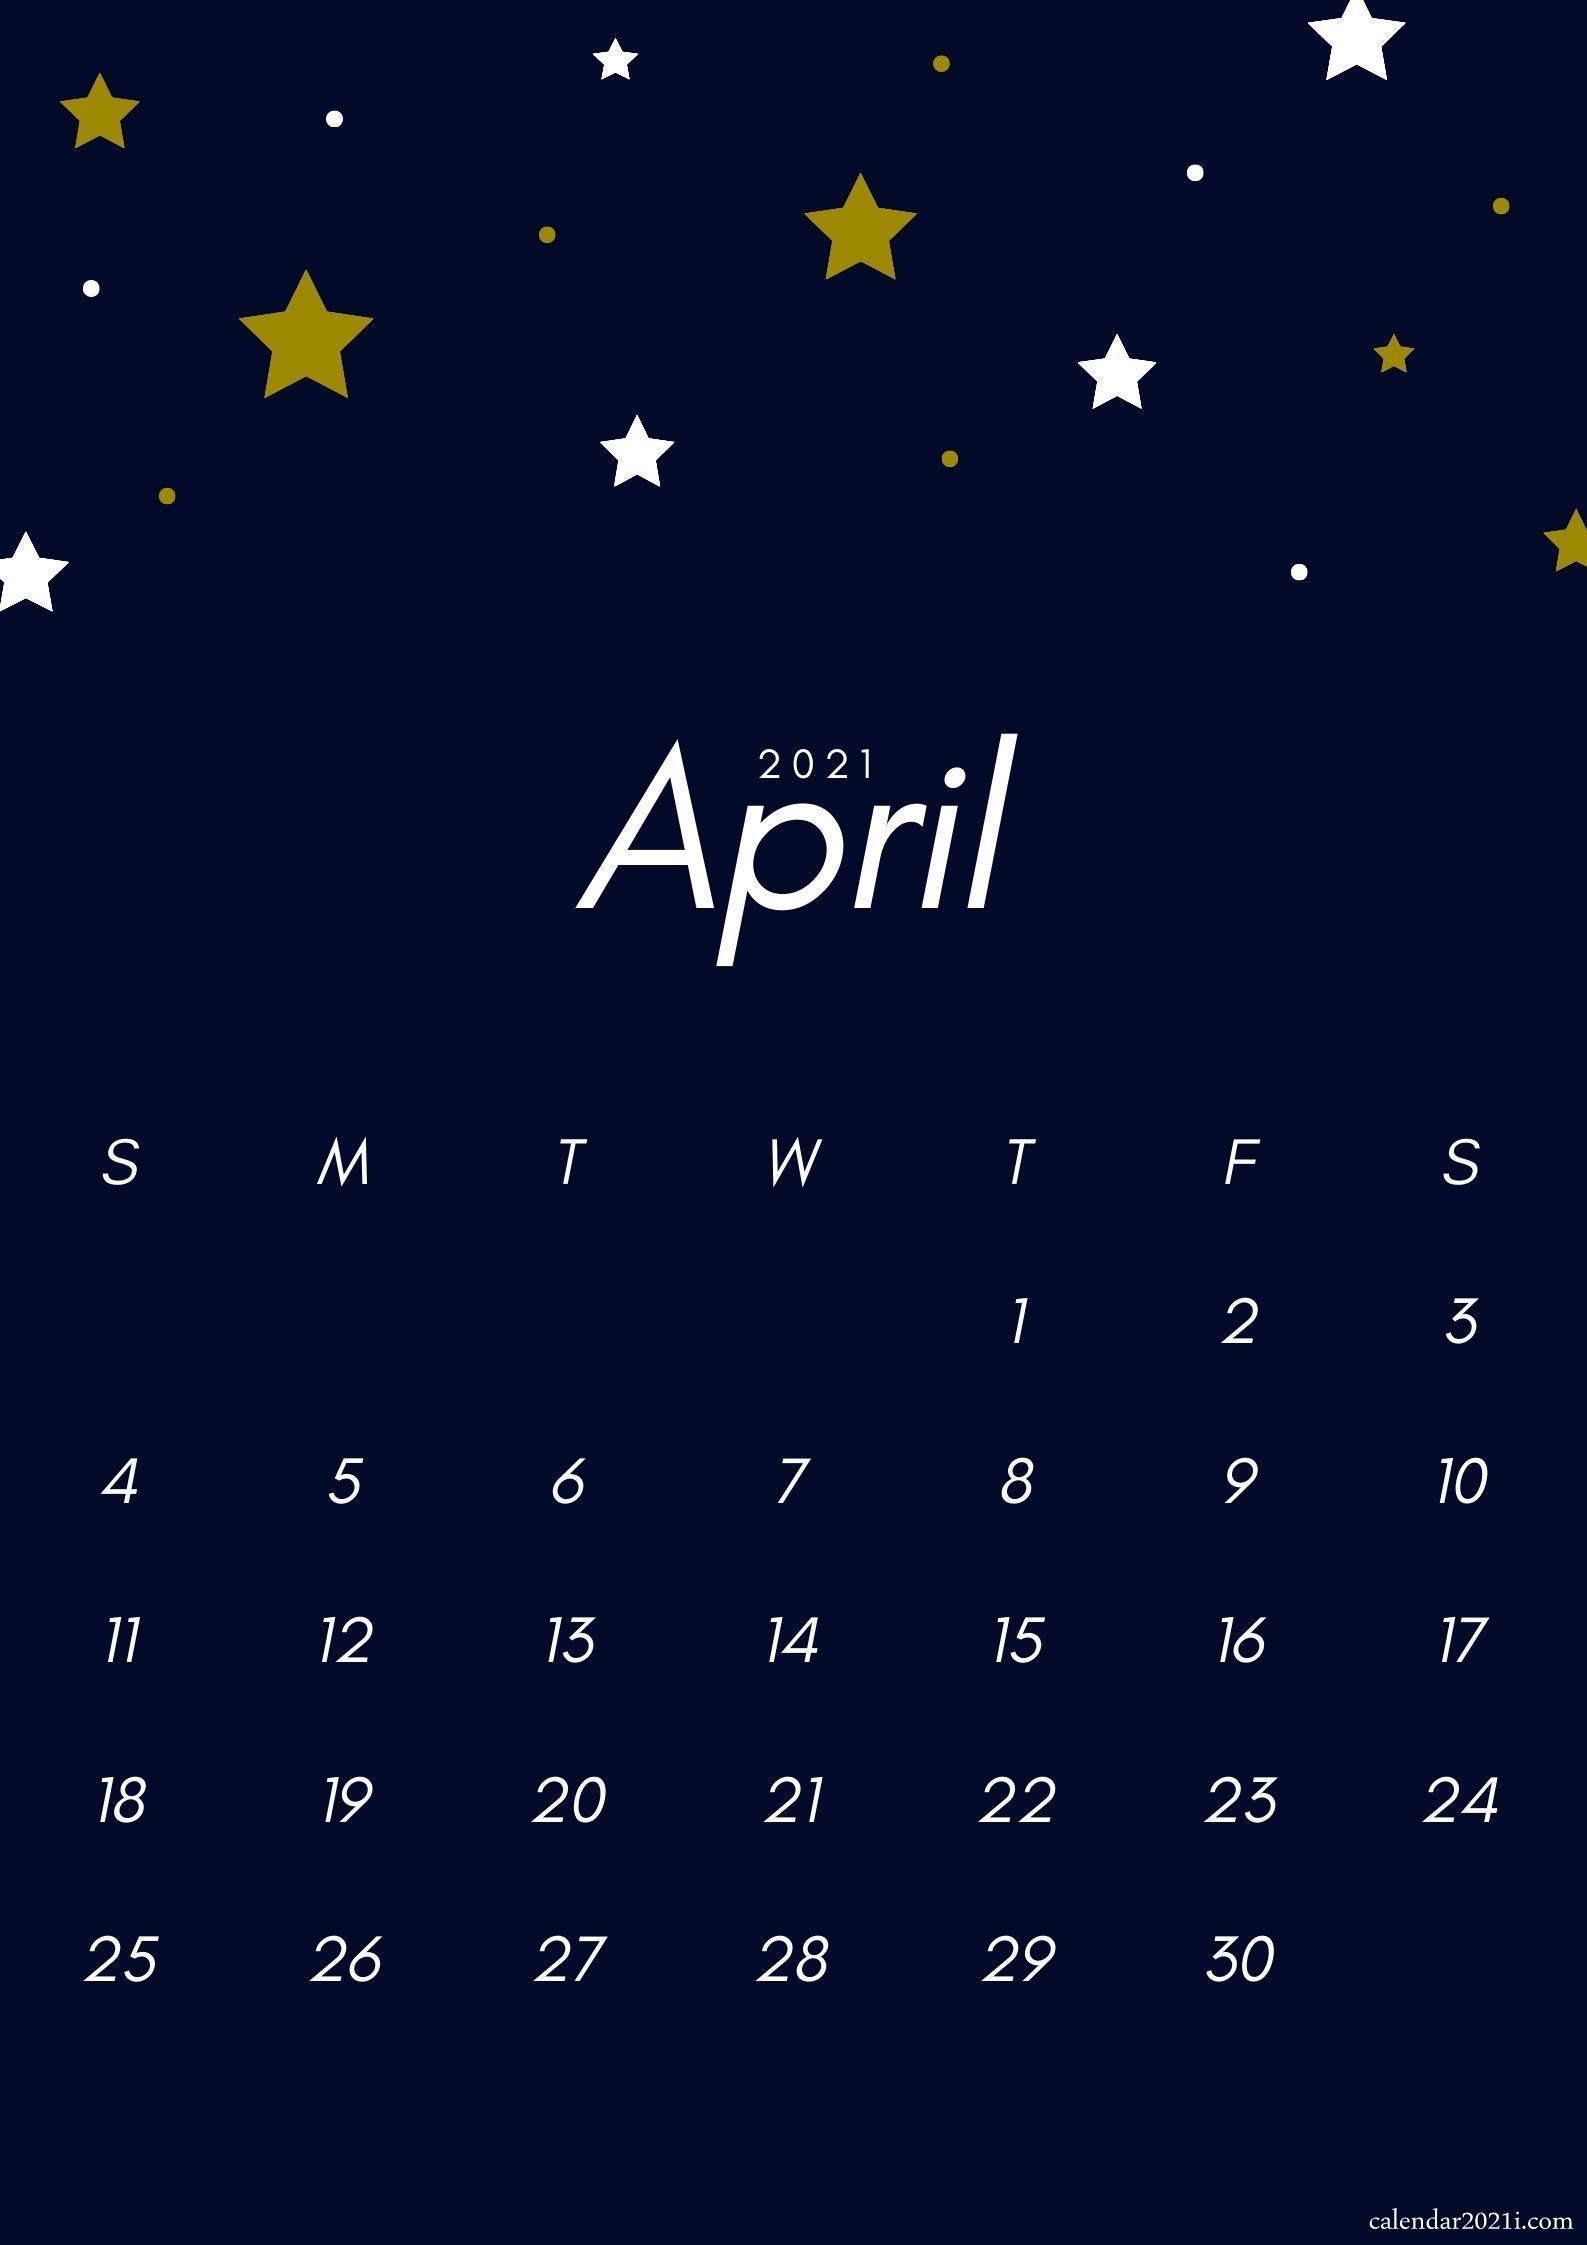 iPhone April 2021 Calendar Wallpaper Free Download. Calendar wallpaper, 2021 calendar, Free calendar